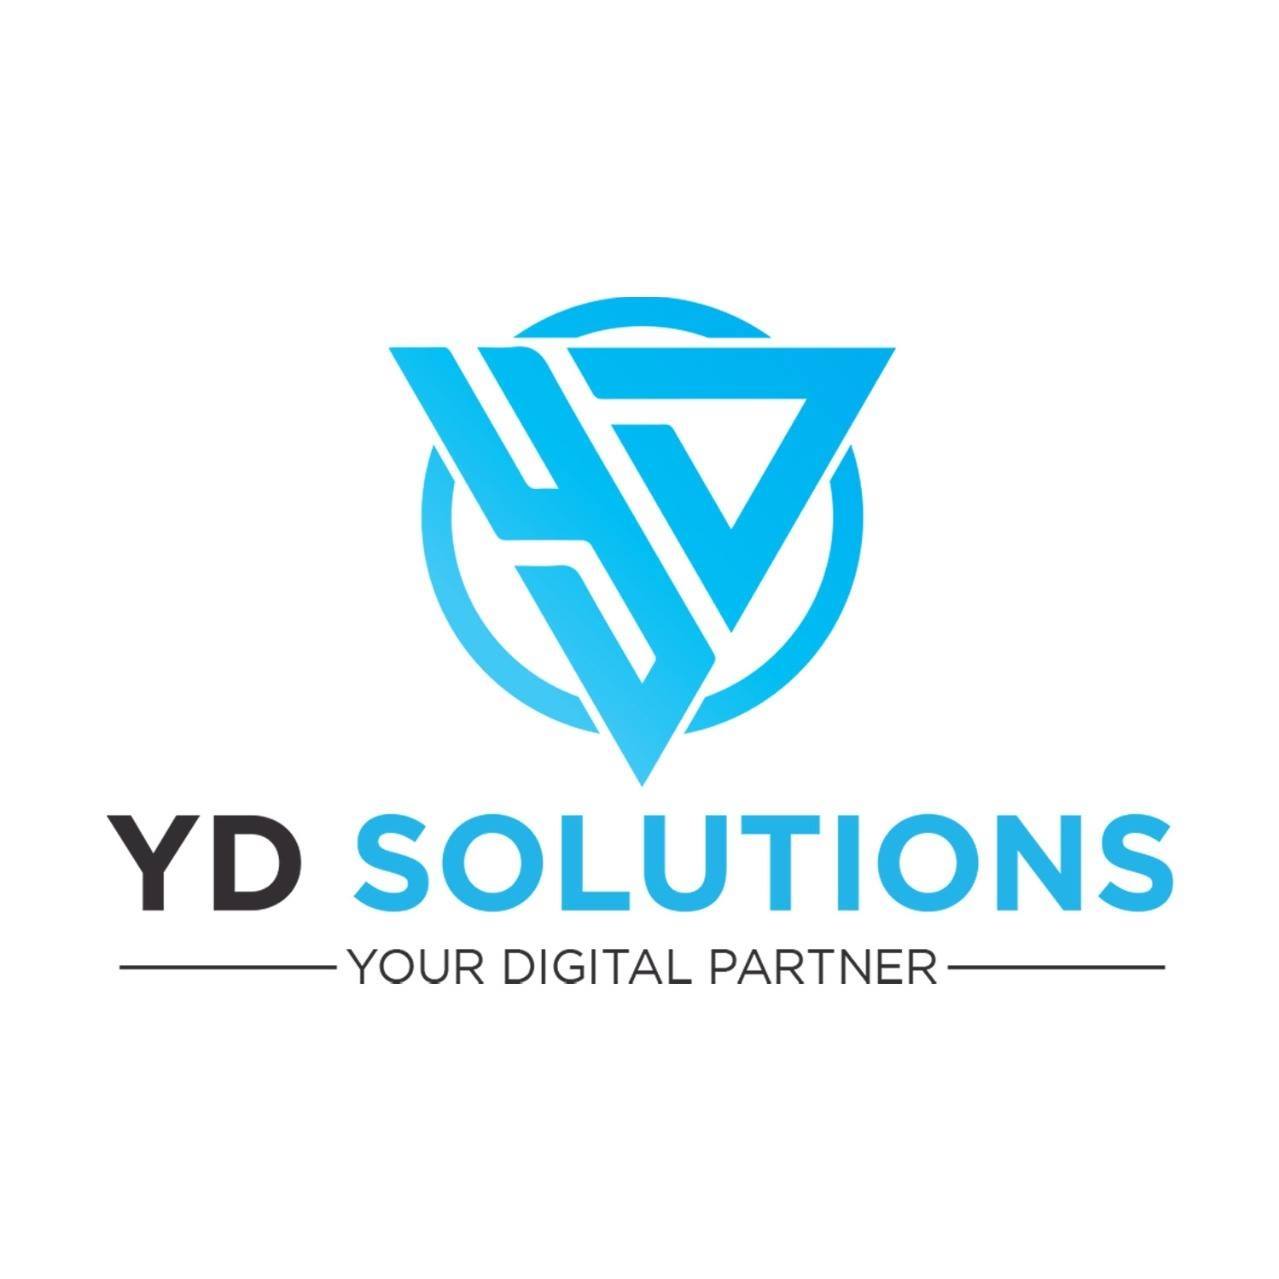 YD Solutions